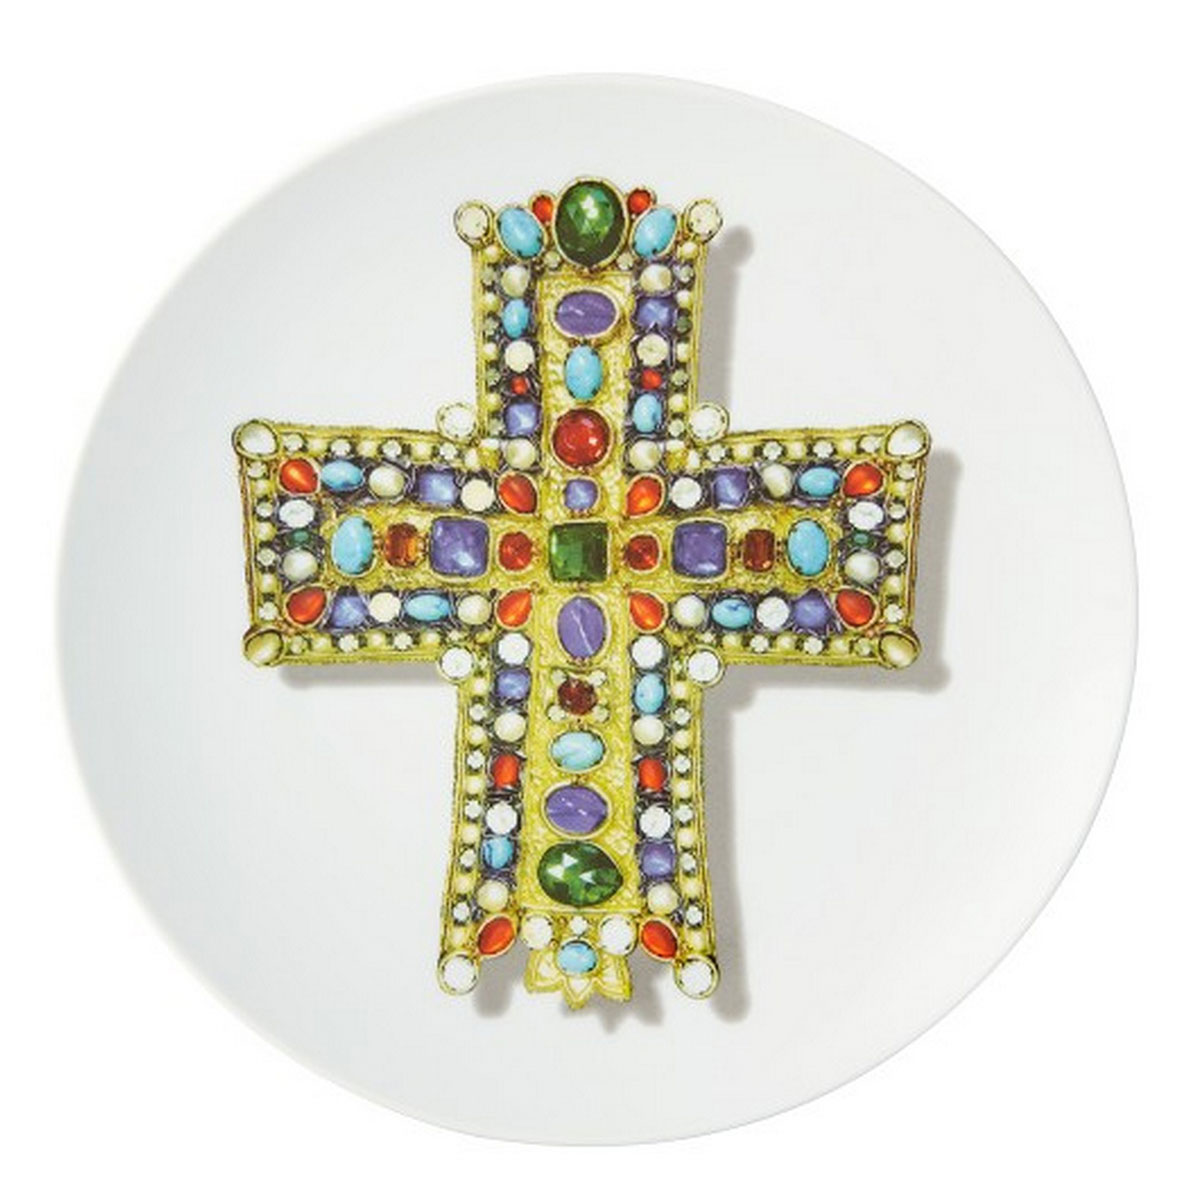 Vista Alegre Porcelain Christian Lacroix - Love Who You Want Set of 4 assorted Crosses